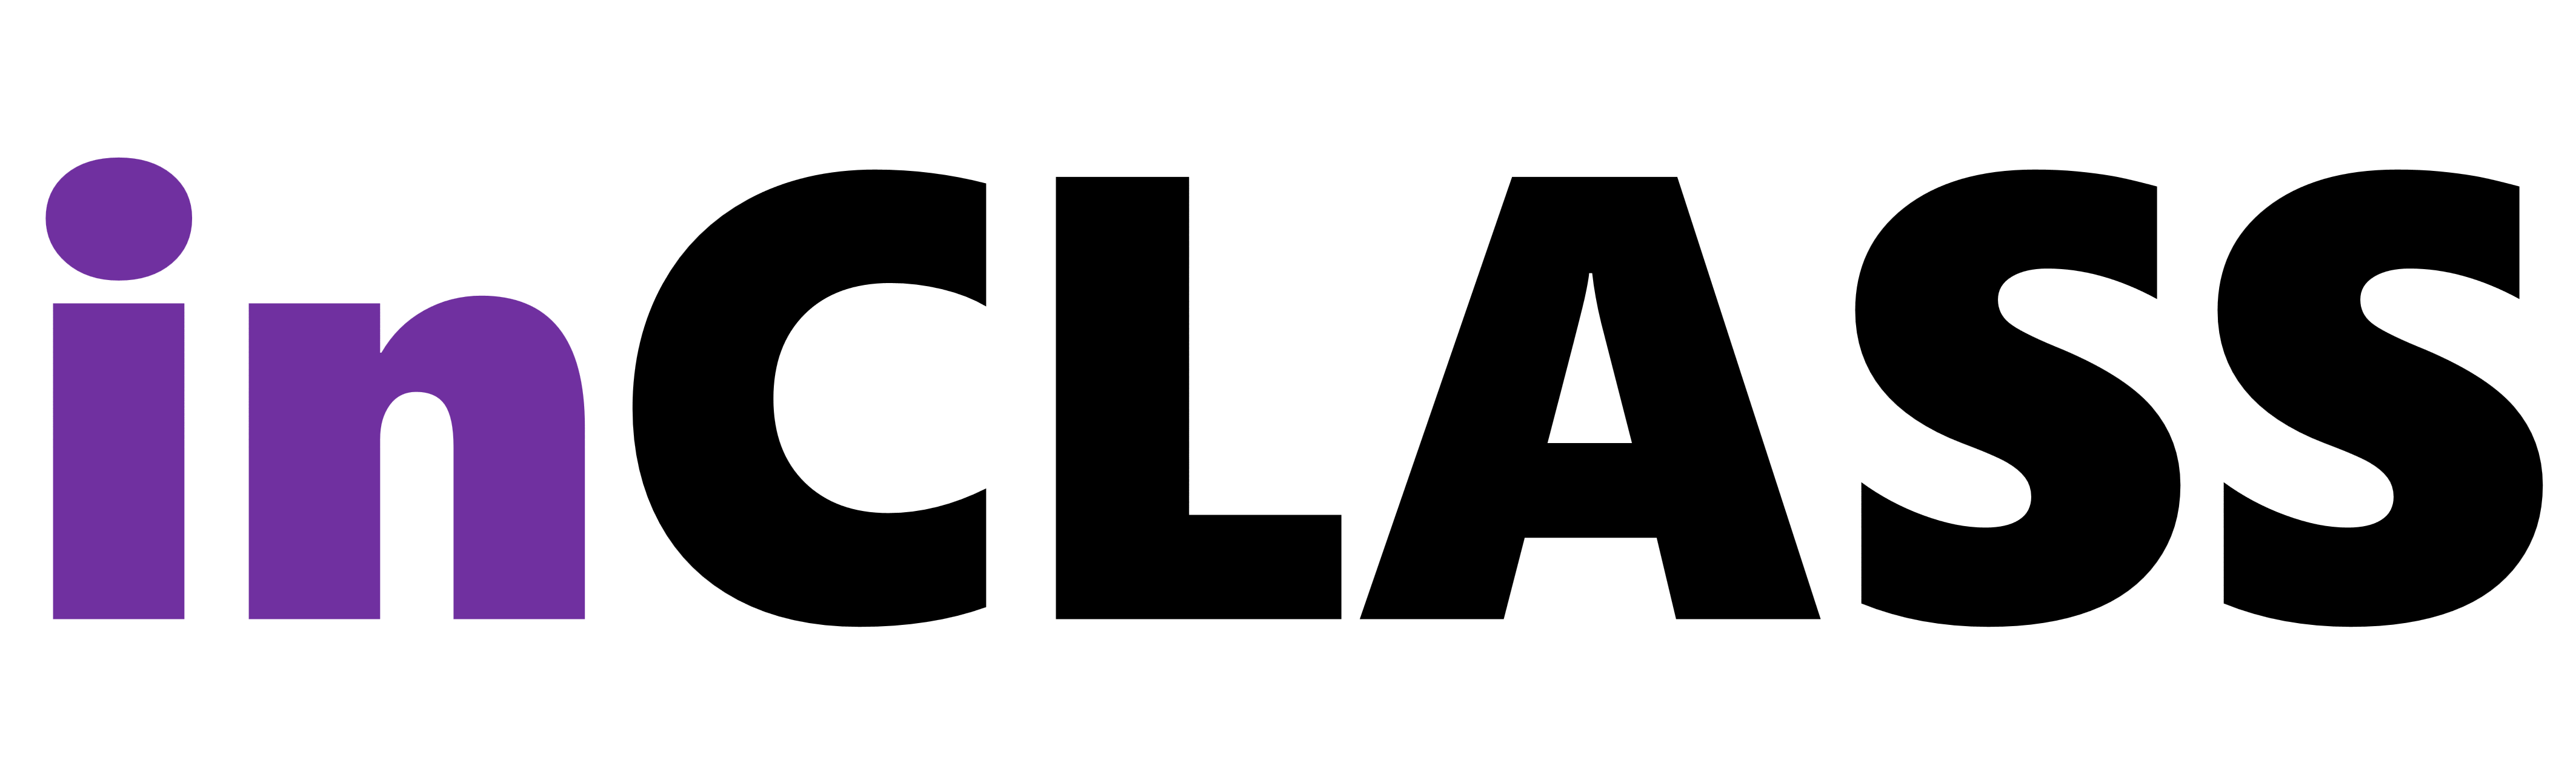 interFit logo